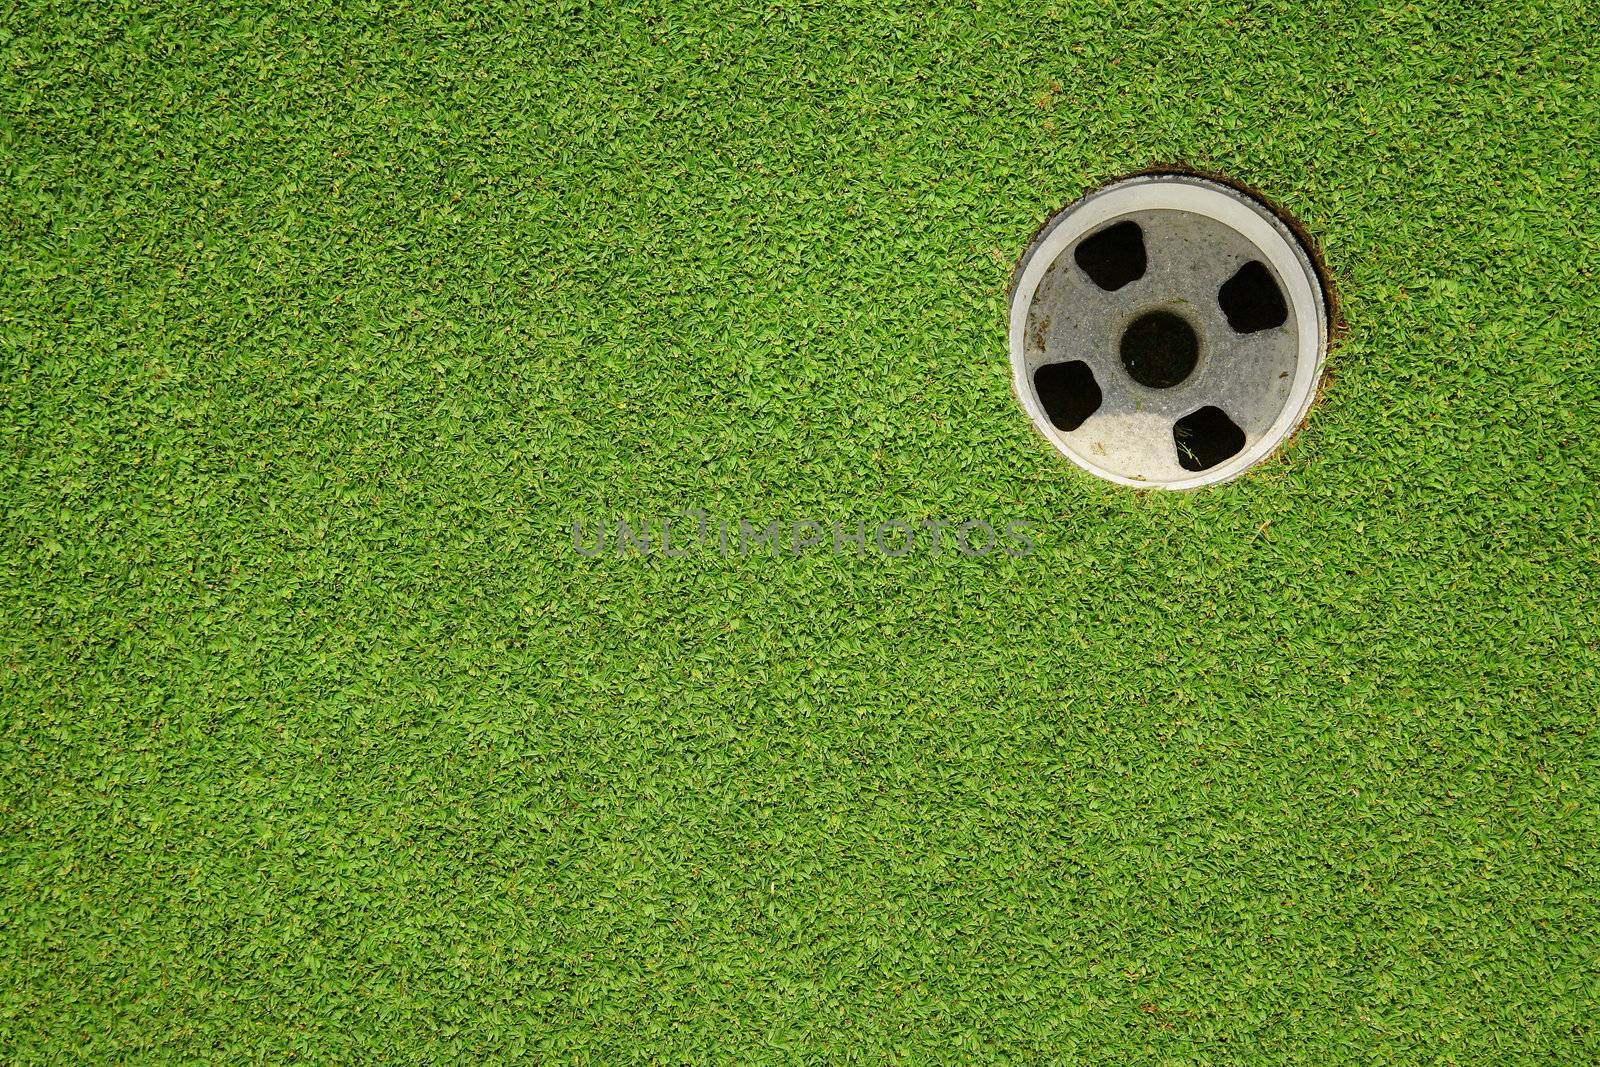 golf hole on a field